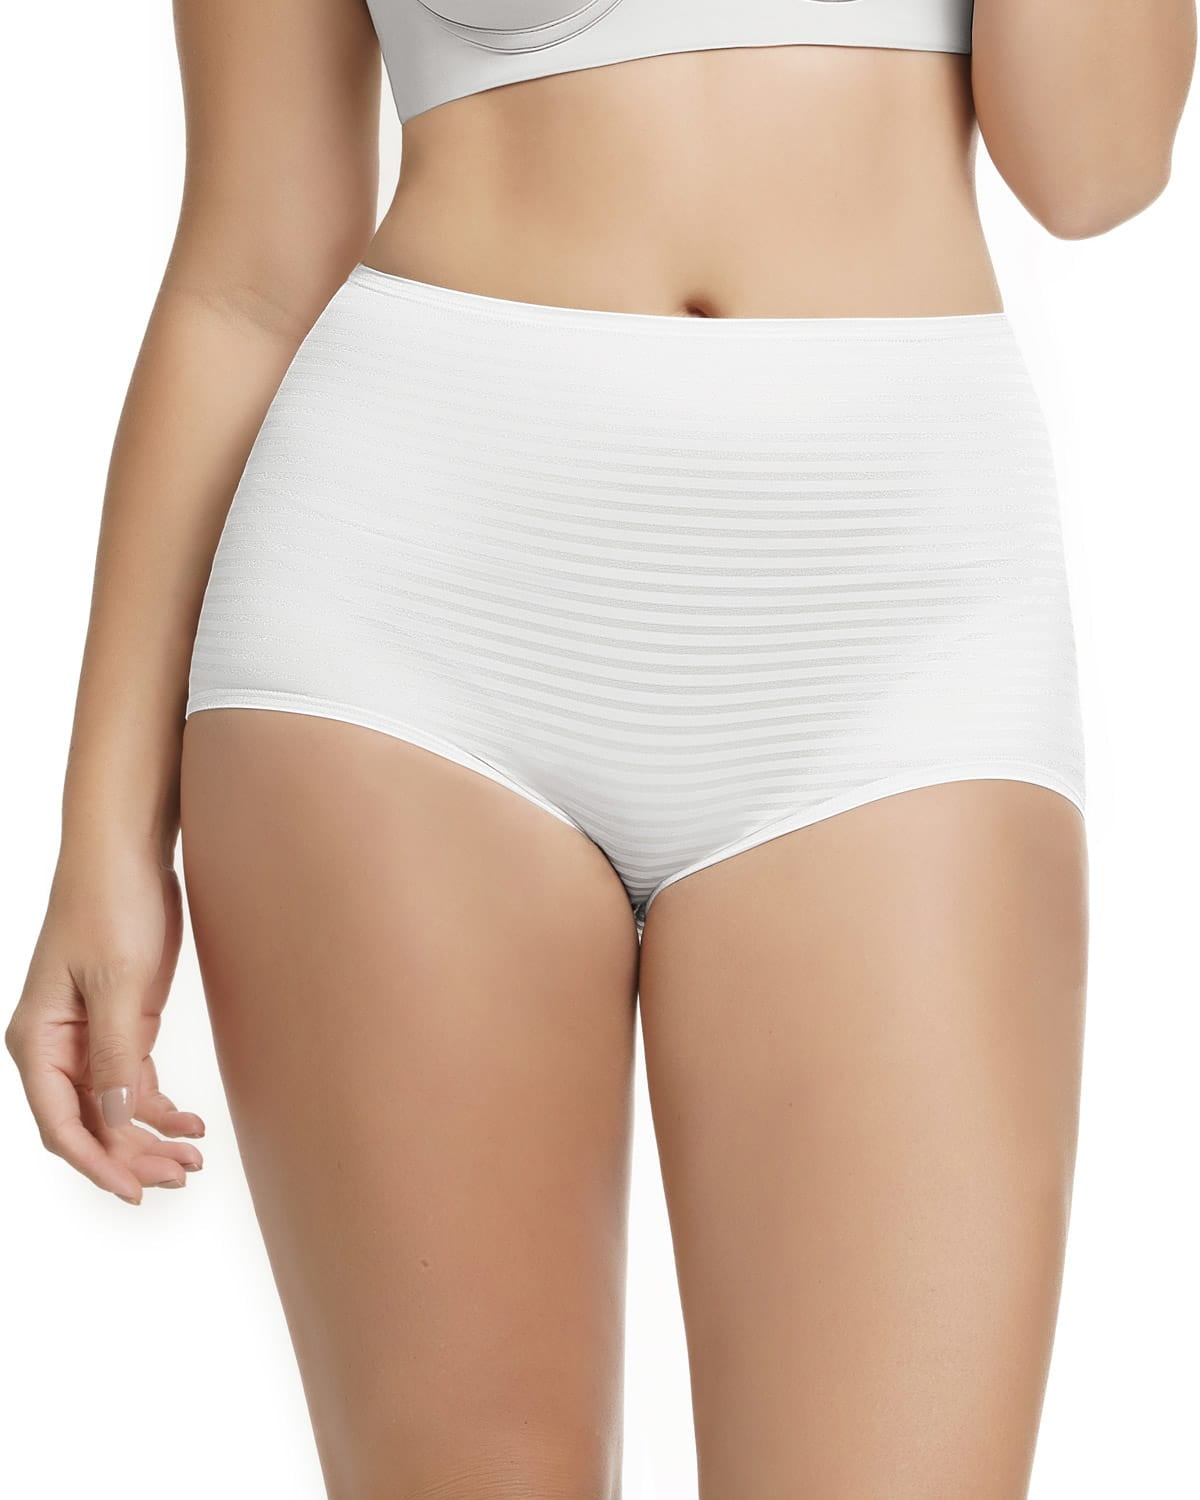 Leonisa 3-pack full coverage classic panties for Women - Size XL - Walmart.com